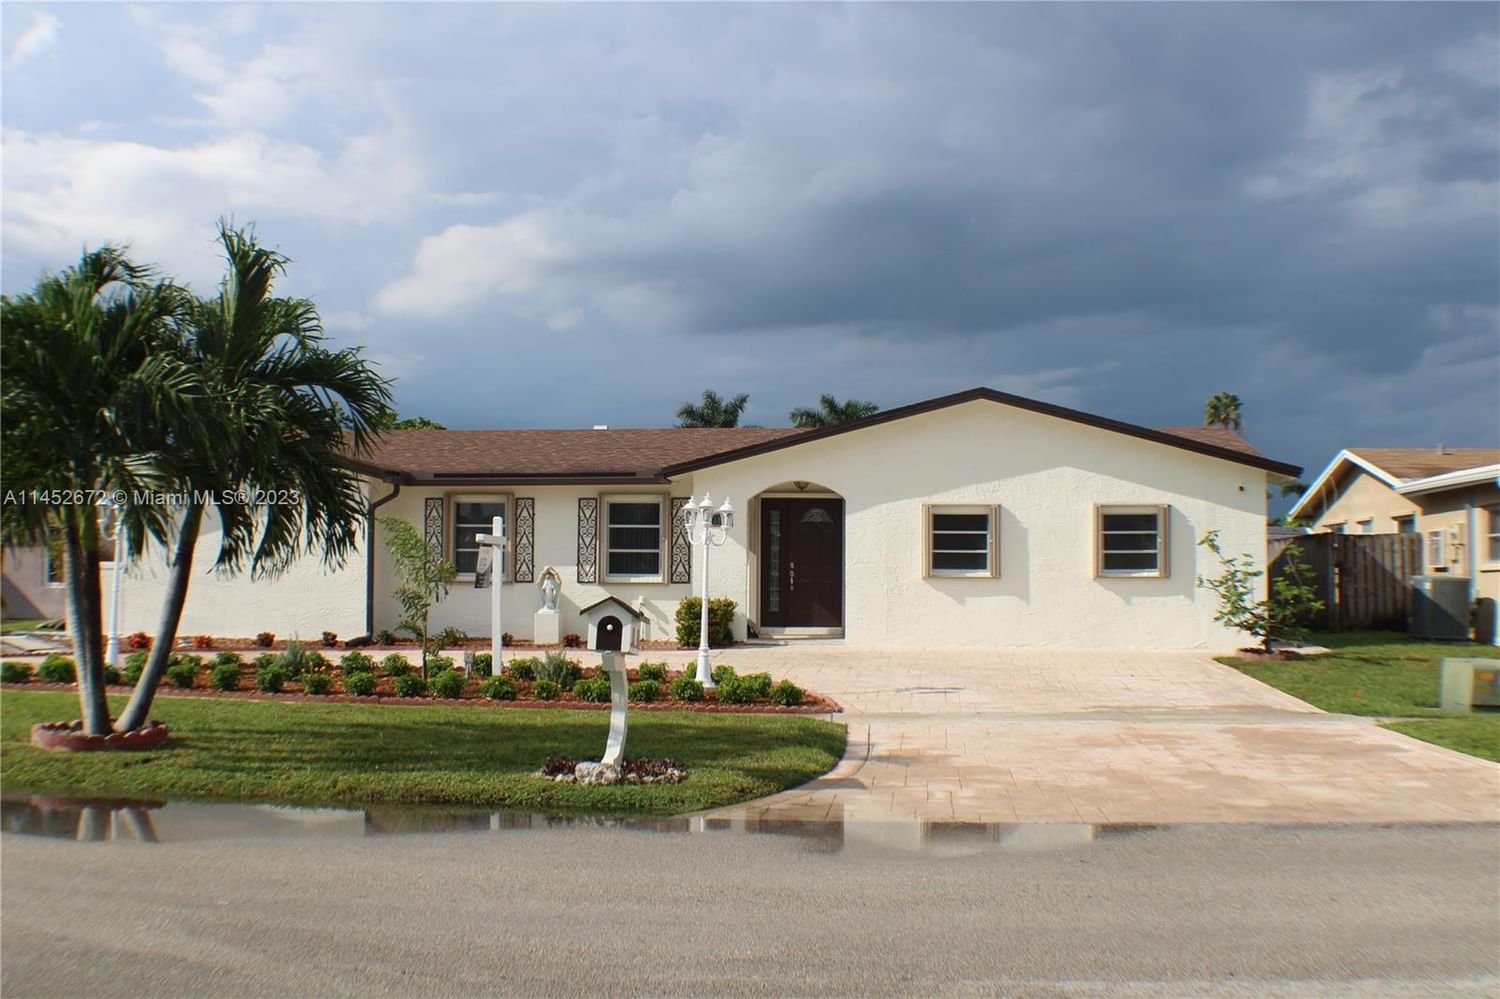 Real estate property located at 11441 29th Mnr, Broward County, SUNRISE GOLF VILLAGE SEC, Sunrise, FL